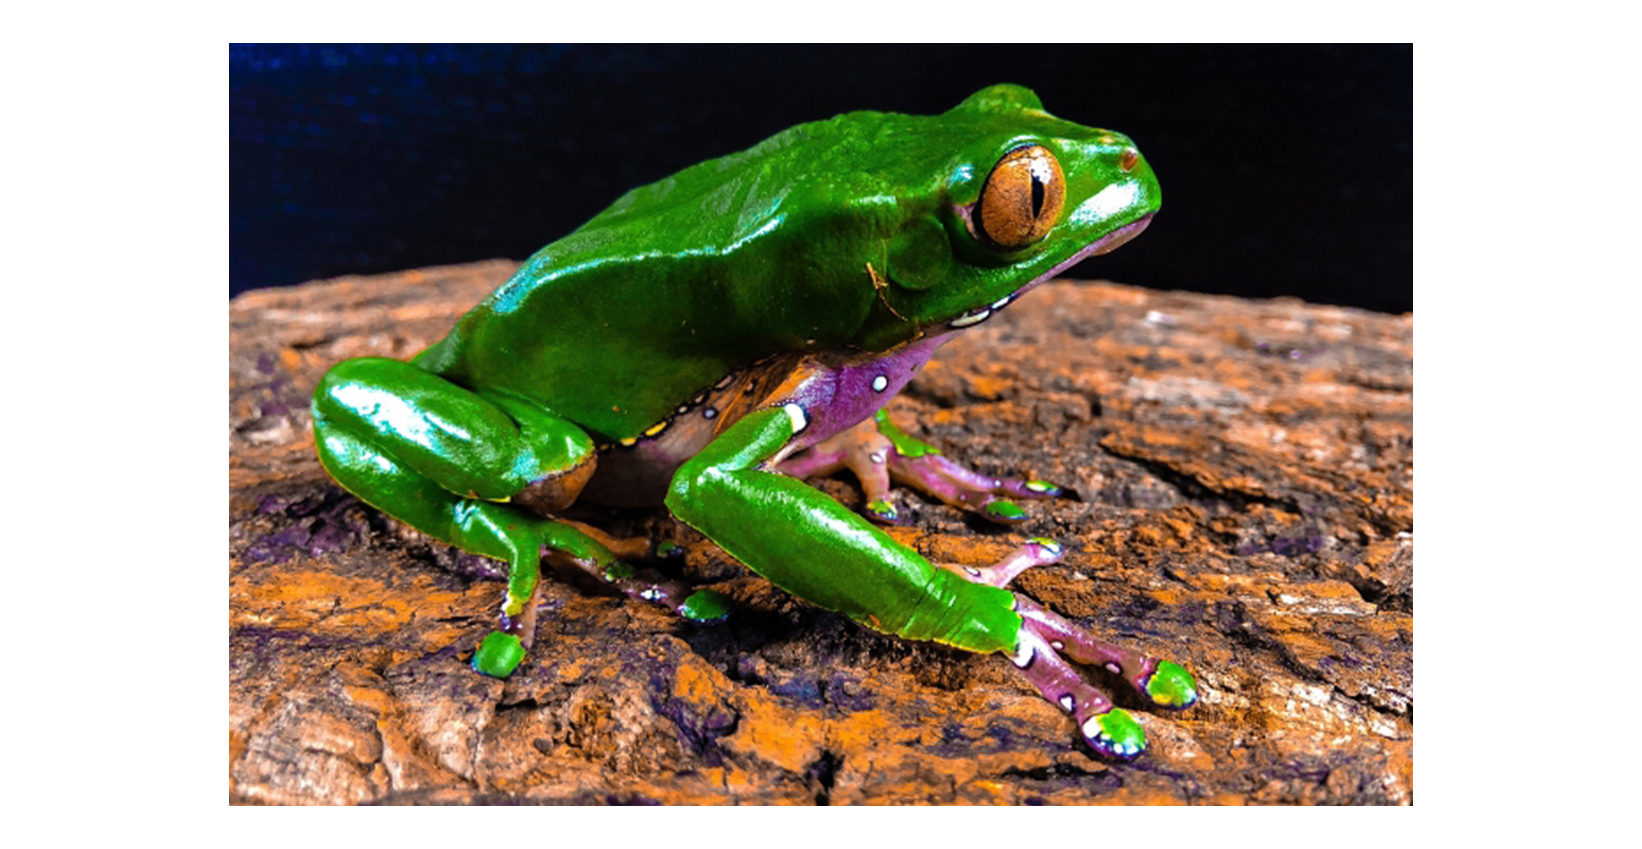 Phyllomedusa bicolor frog